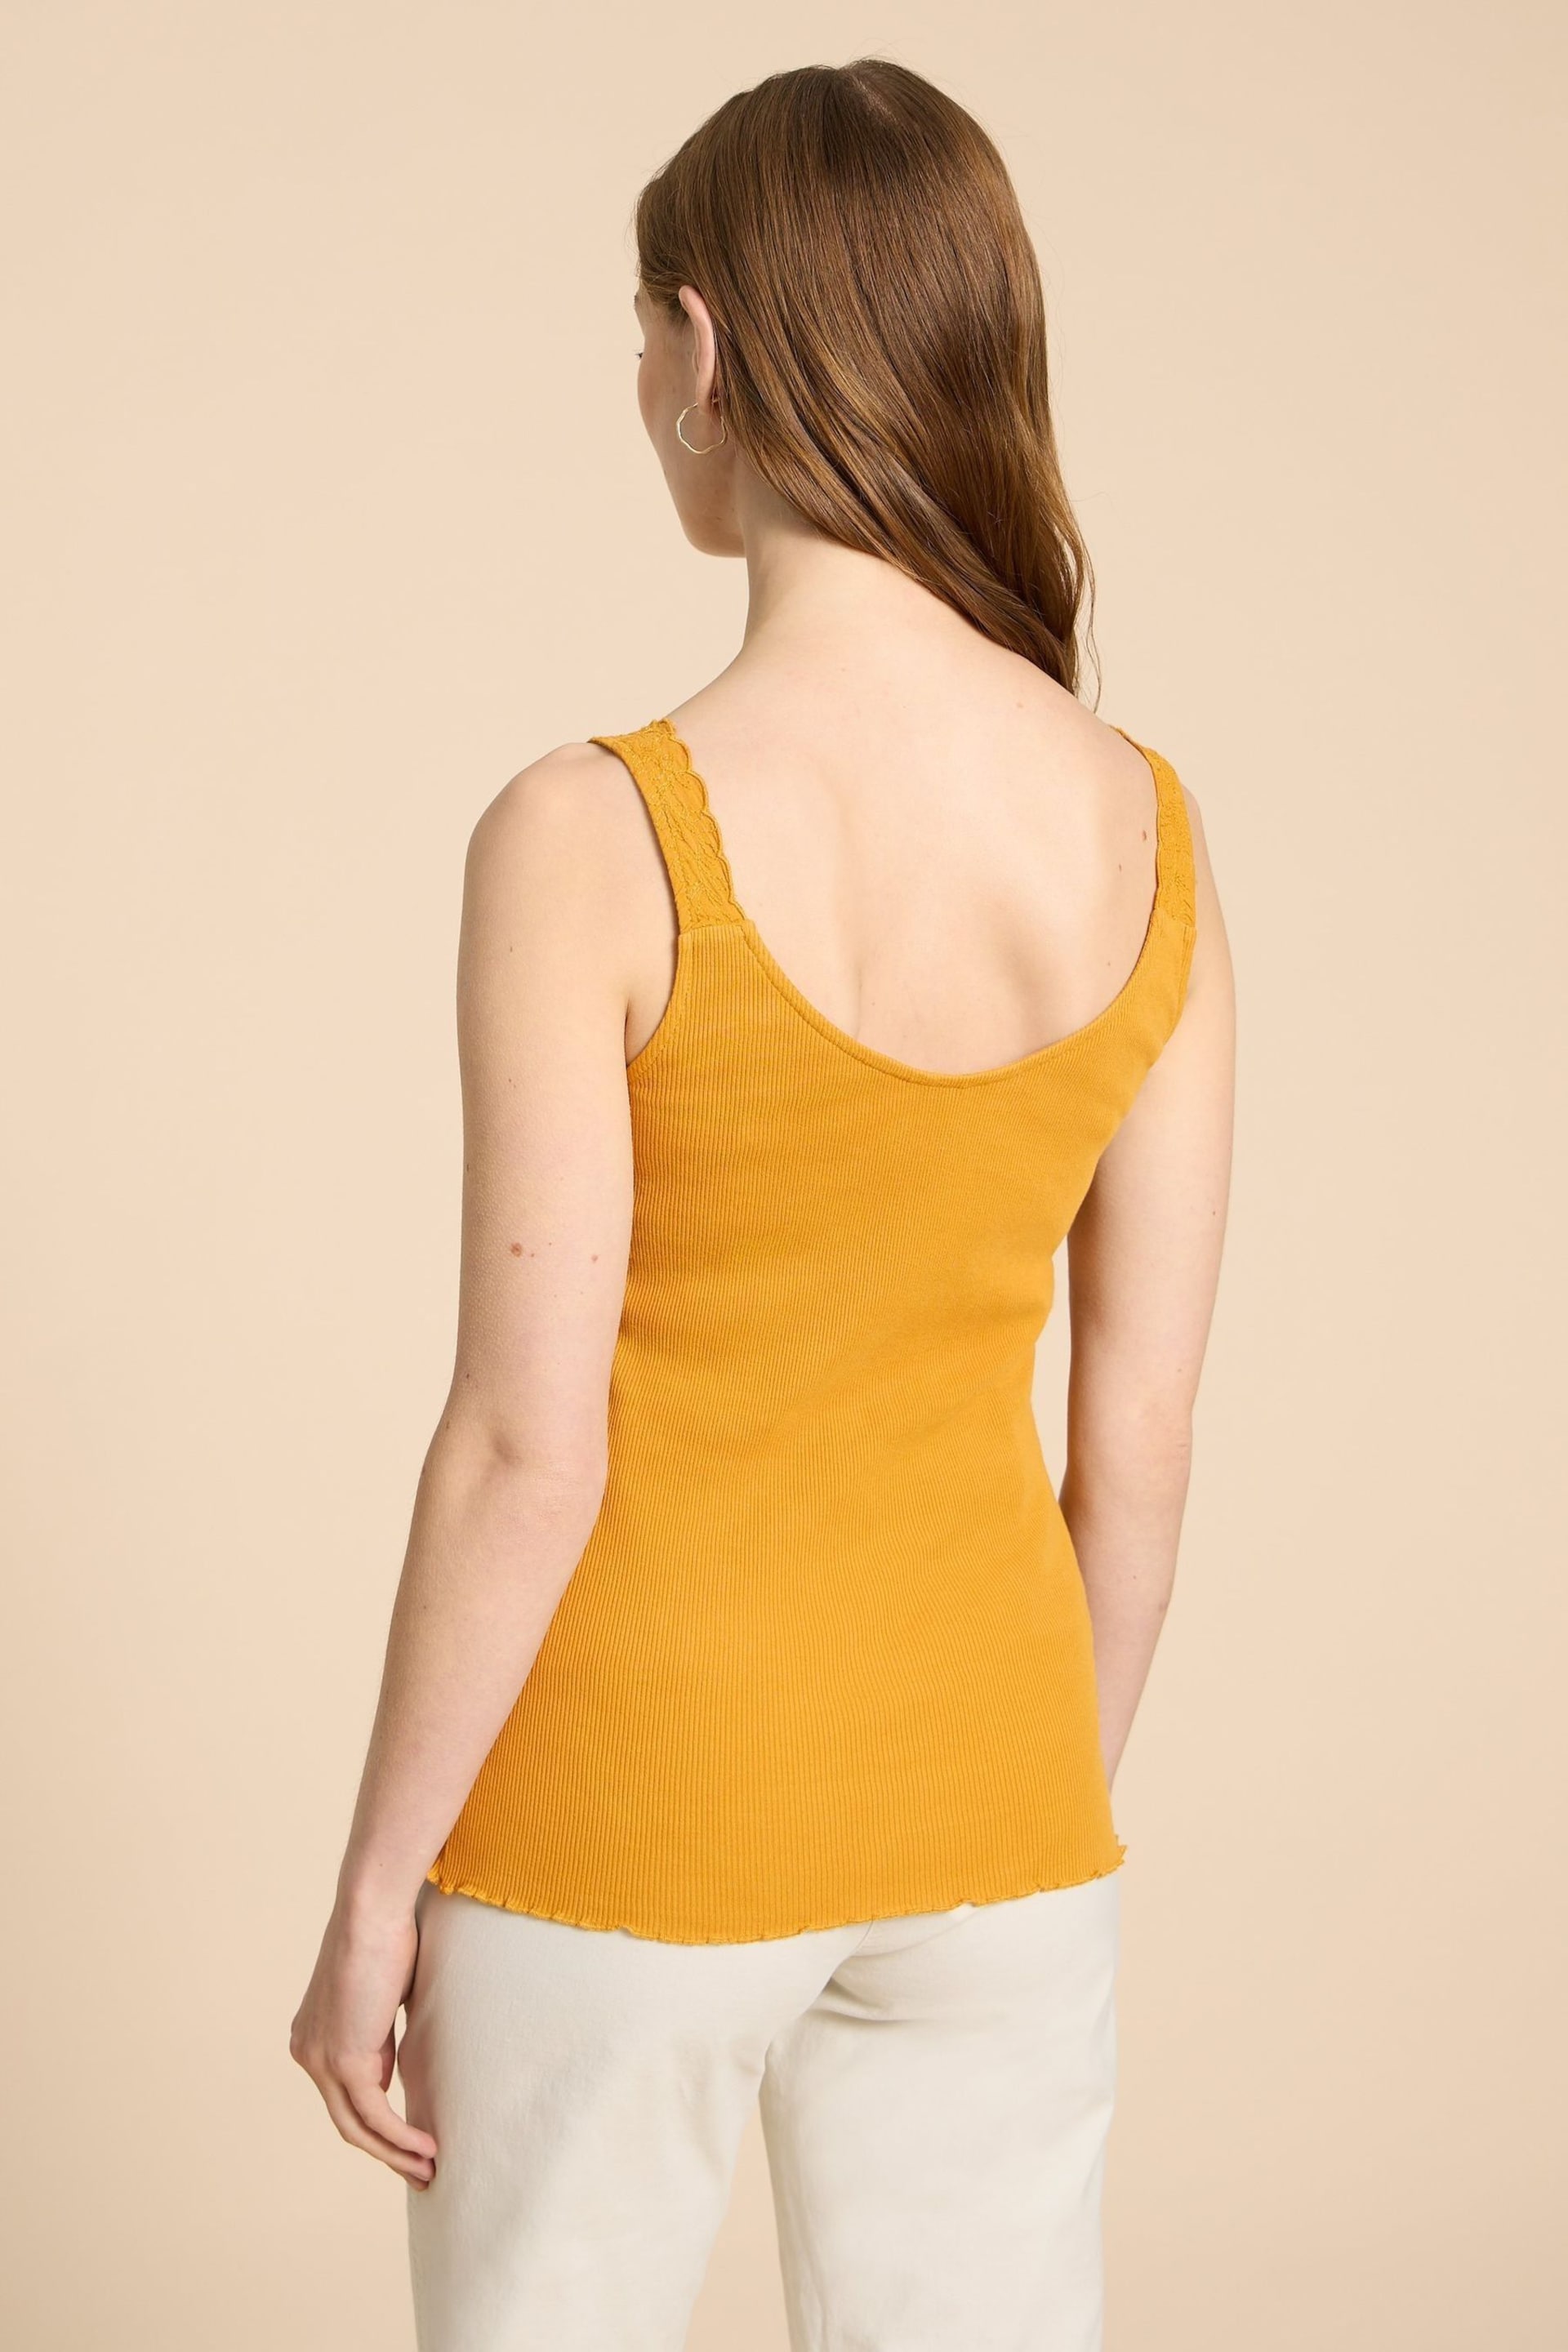 White Stuff Orange Seabreeze Vest - Image 2 of 7